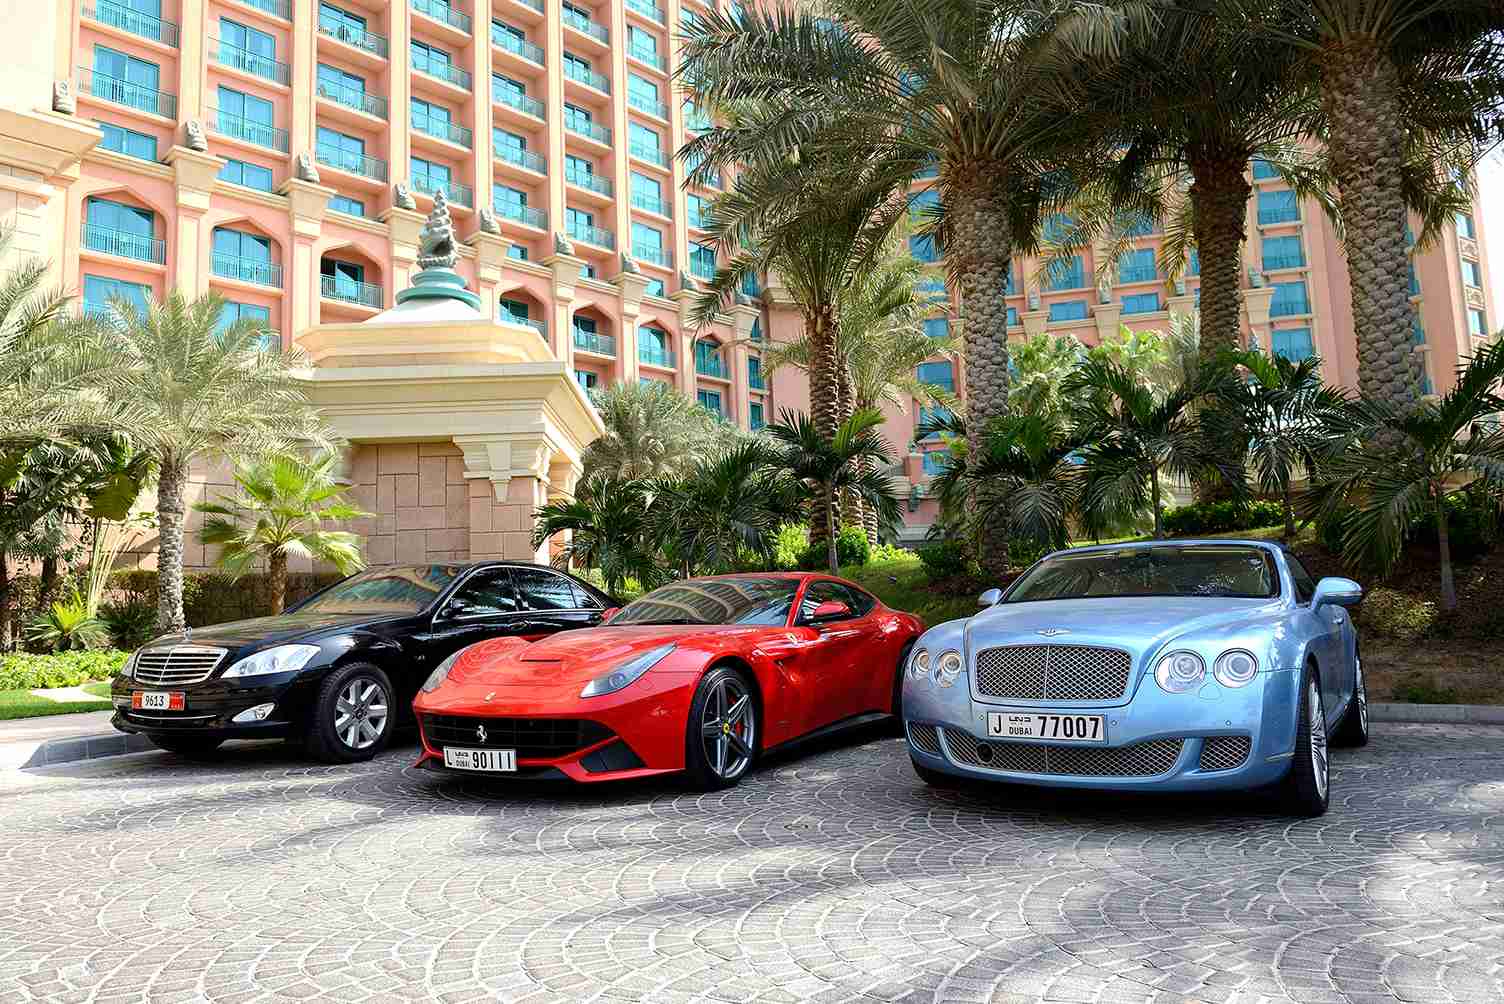 Top Favourite Cars in UAE